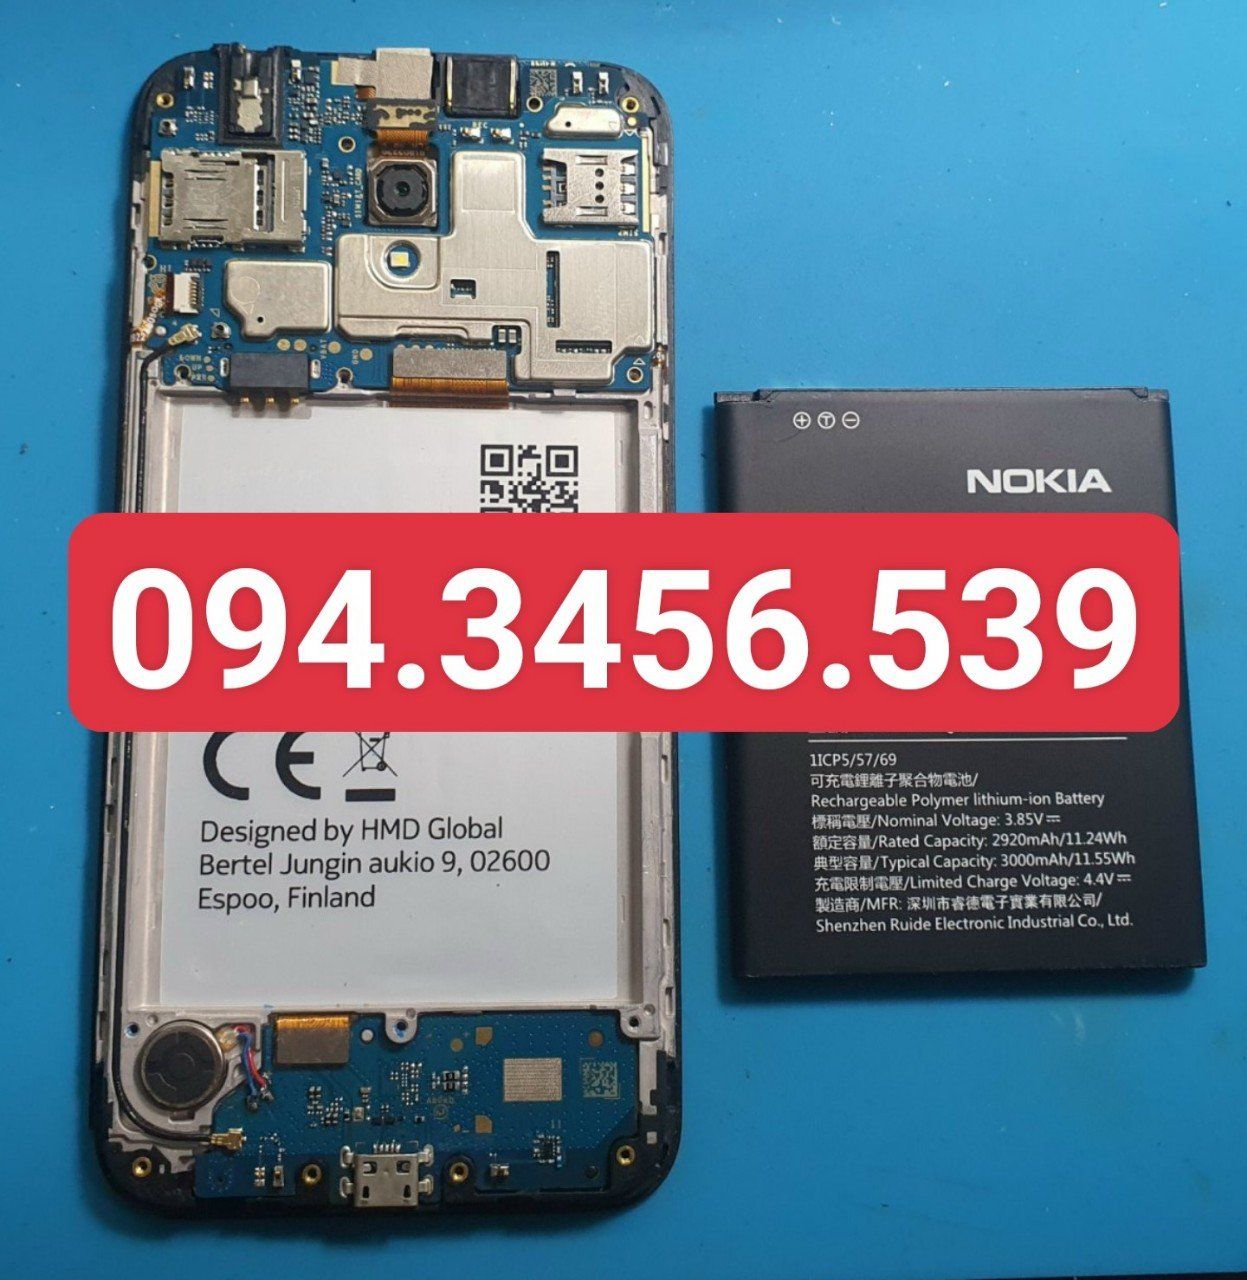  Pin Nokia 2.2 